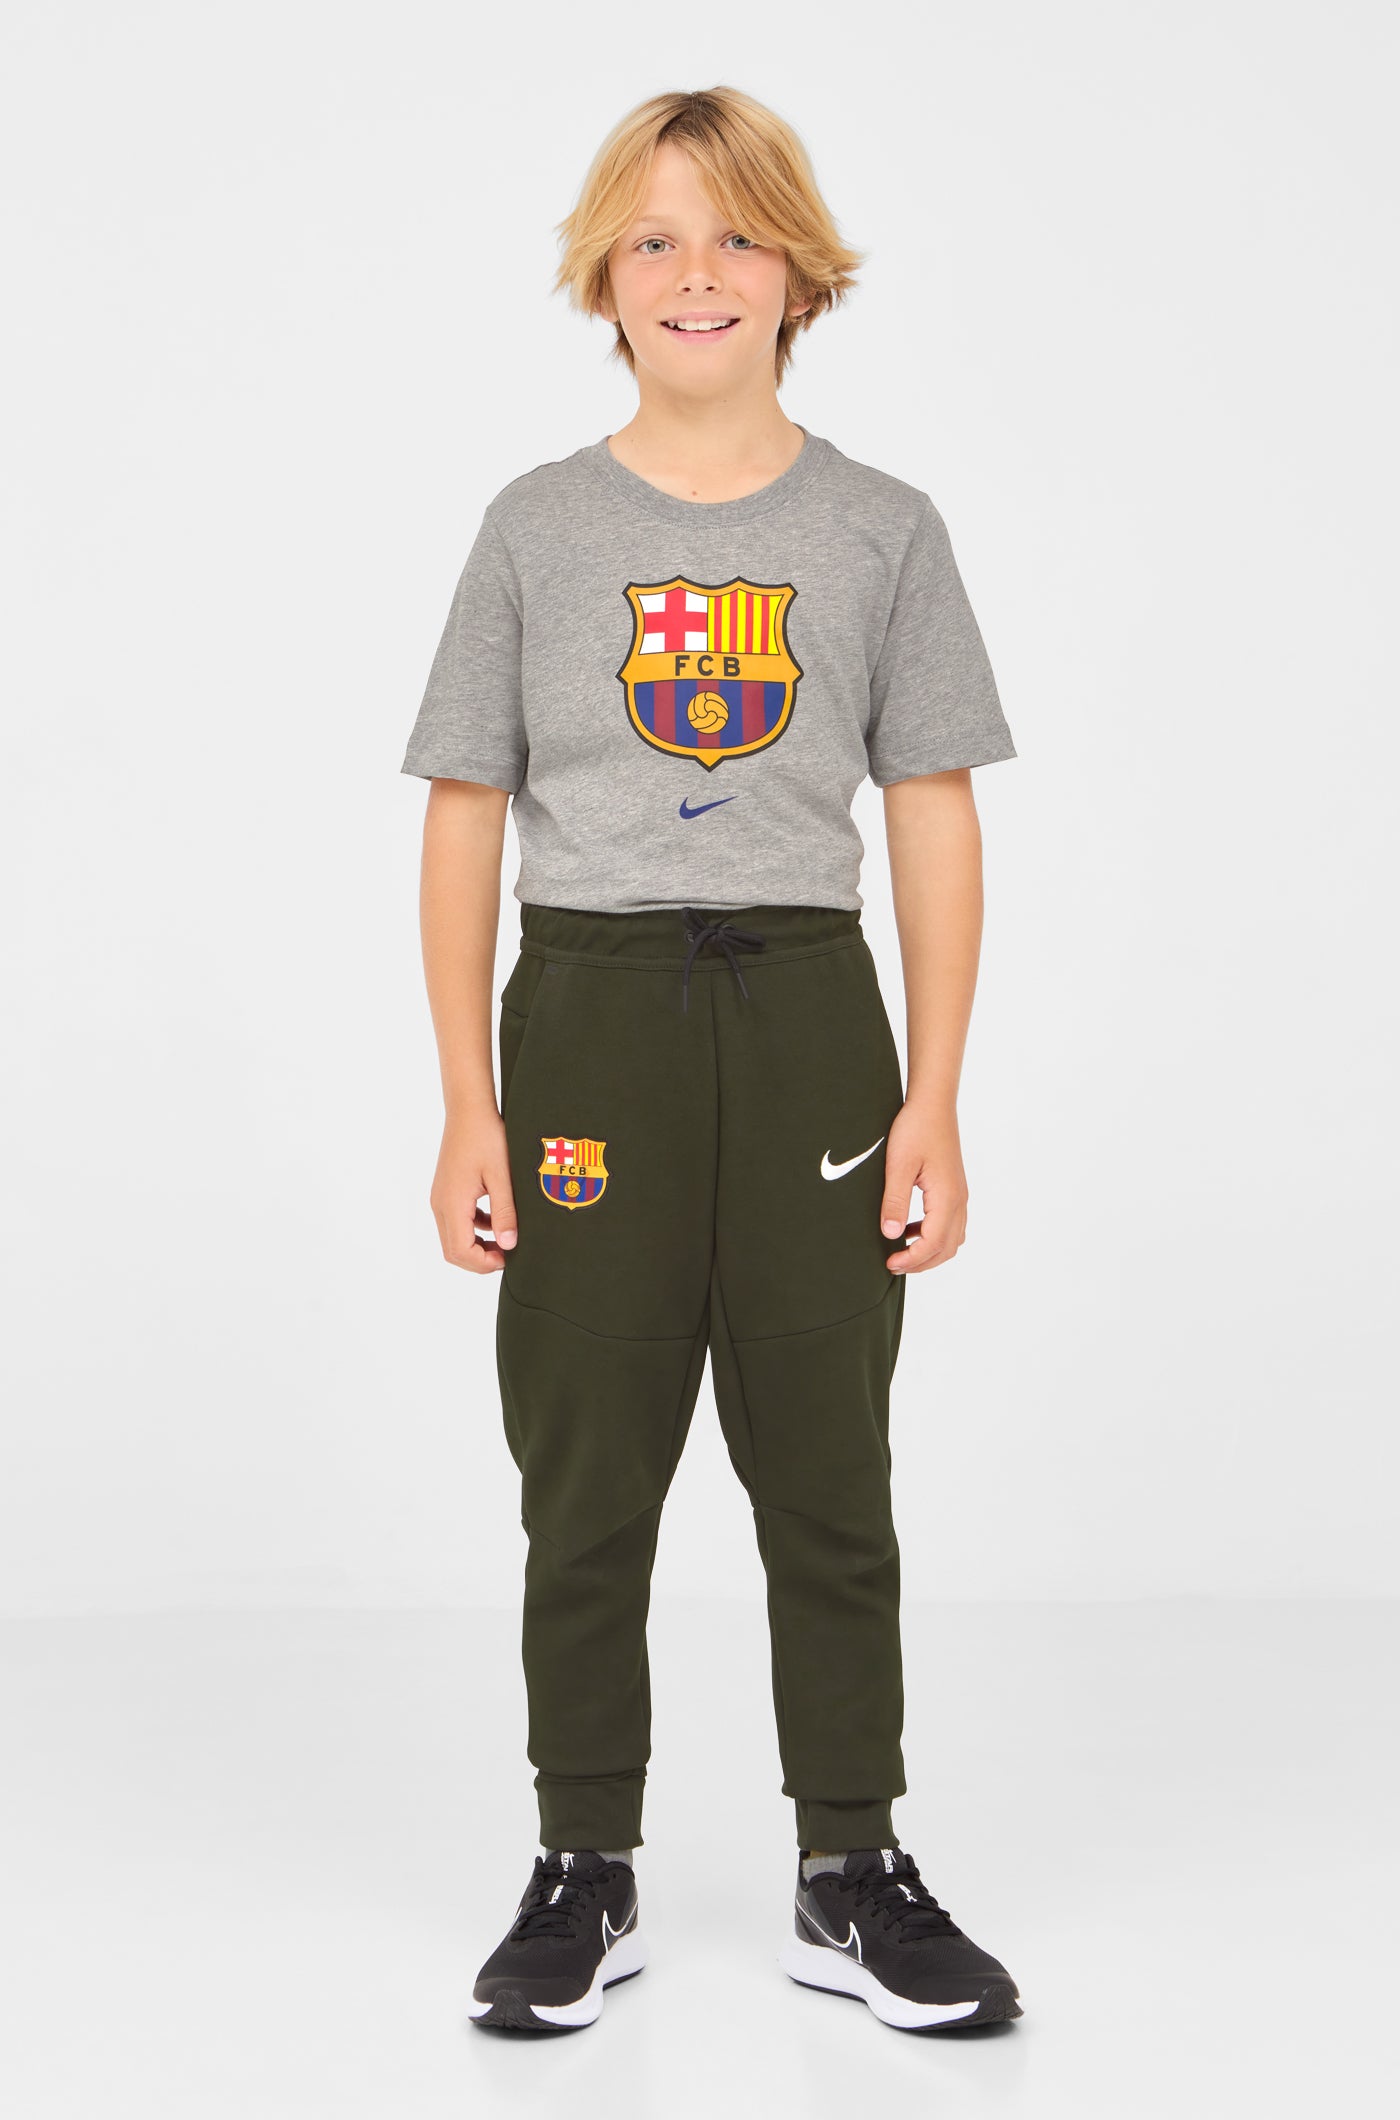 Rally Onderzoek het Nat Tech Barça Nike Pants - Junior – Barça Official Store Spotify Camp Nou